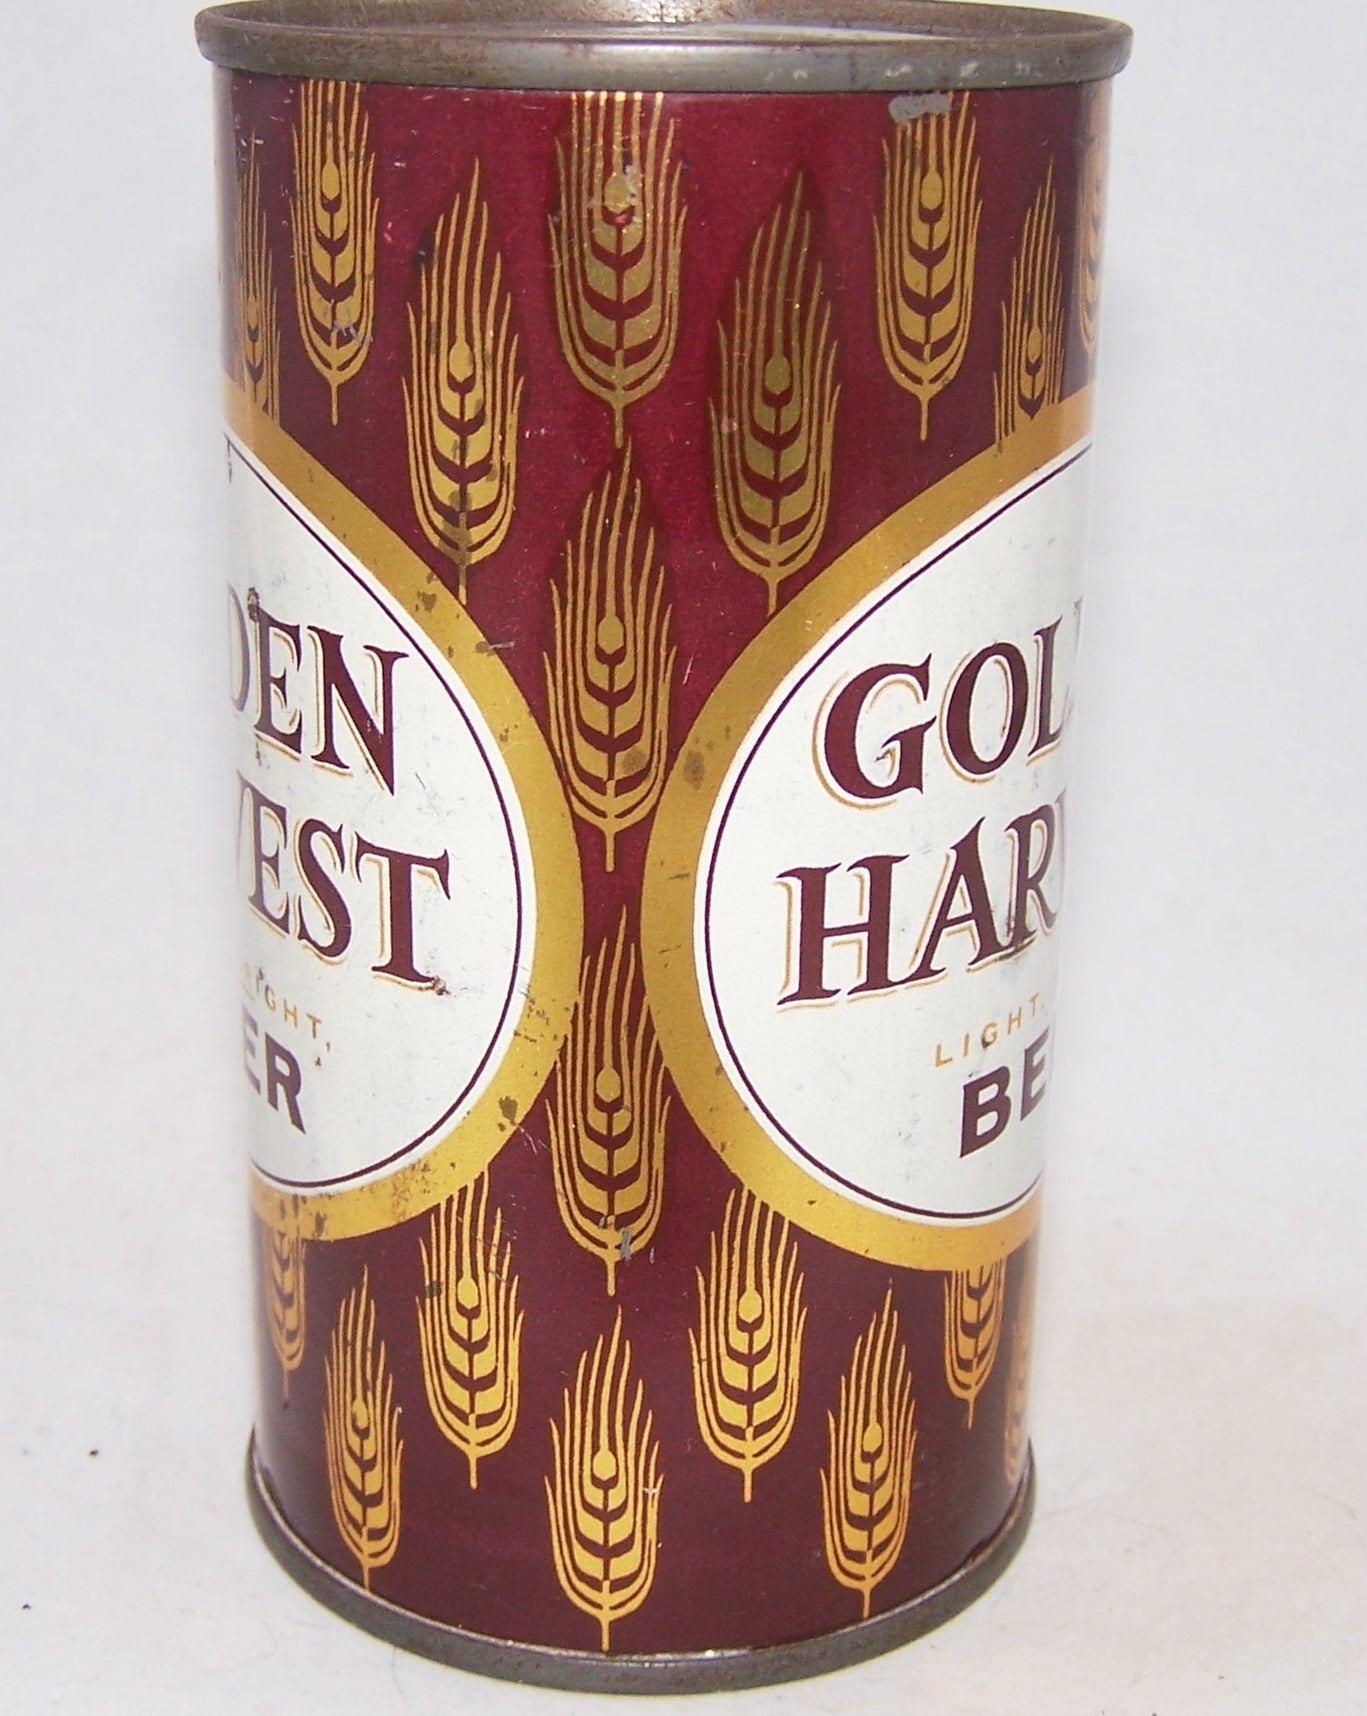 Rare Golden Harvest Beer, USBC 73-19, Grade 1- Sold on 2/14/18